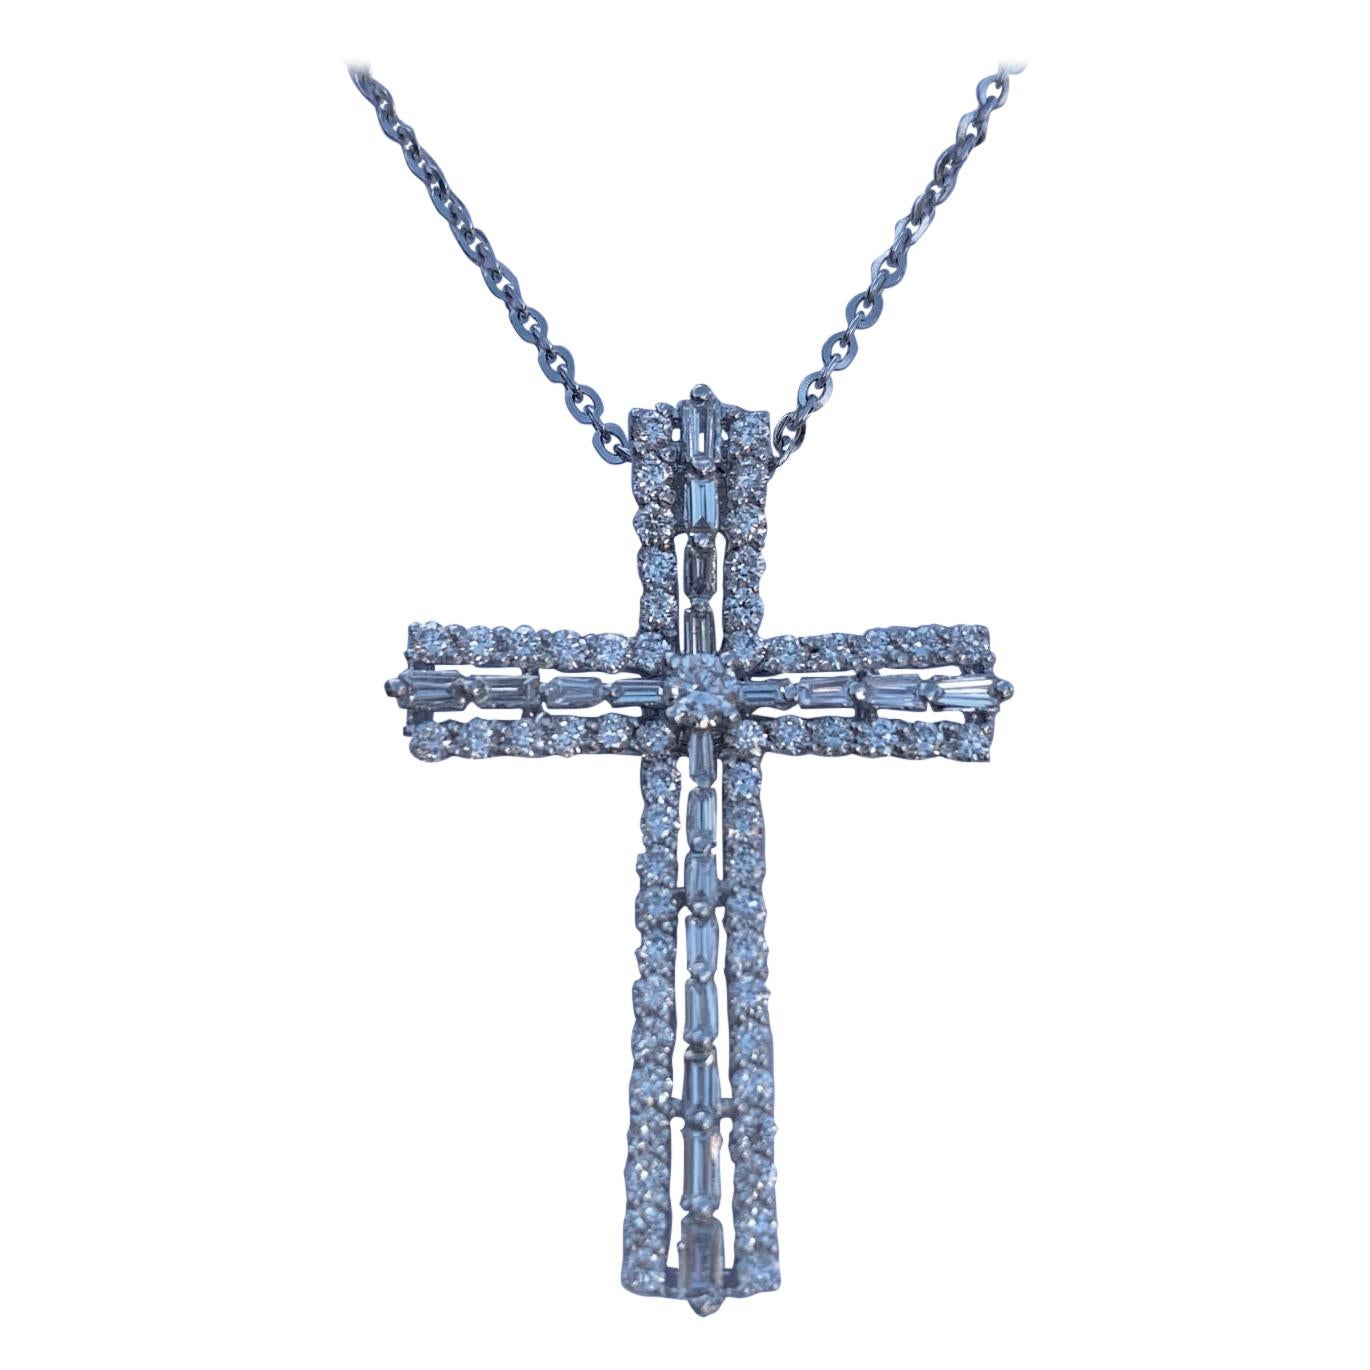 Heavenly 1.25 Carat Diamond Cross Pendant in 18K White Gold on White Gold Chain